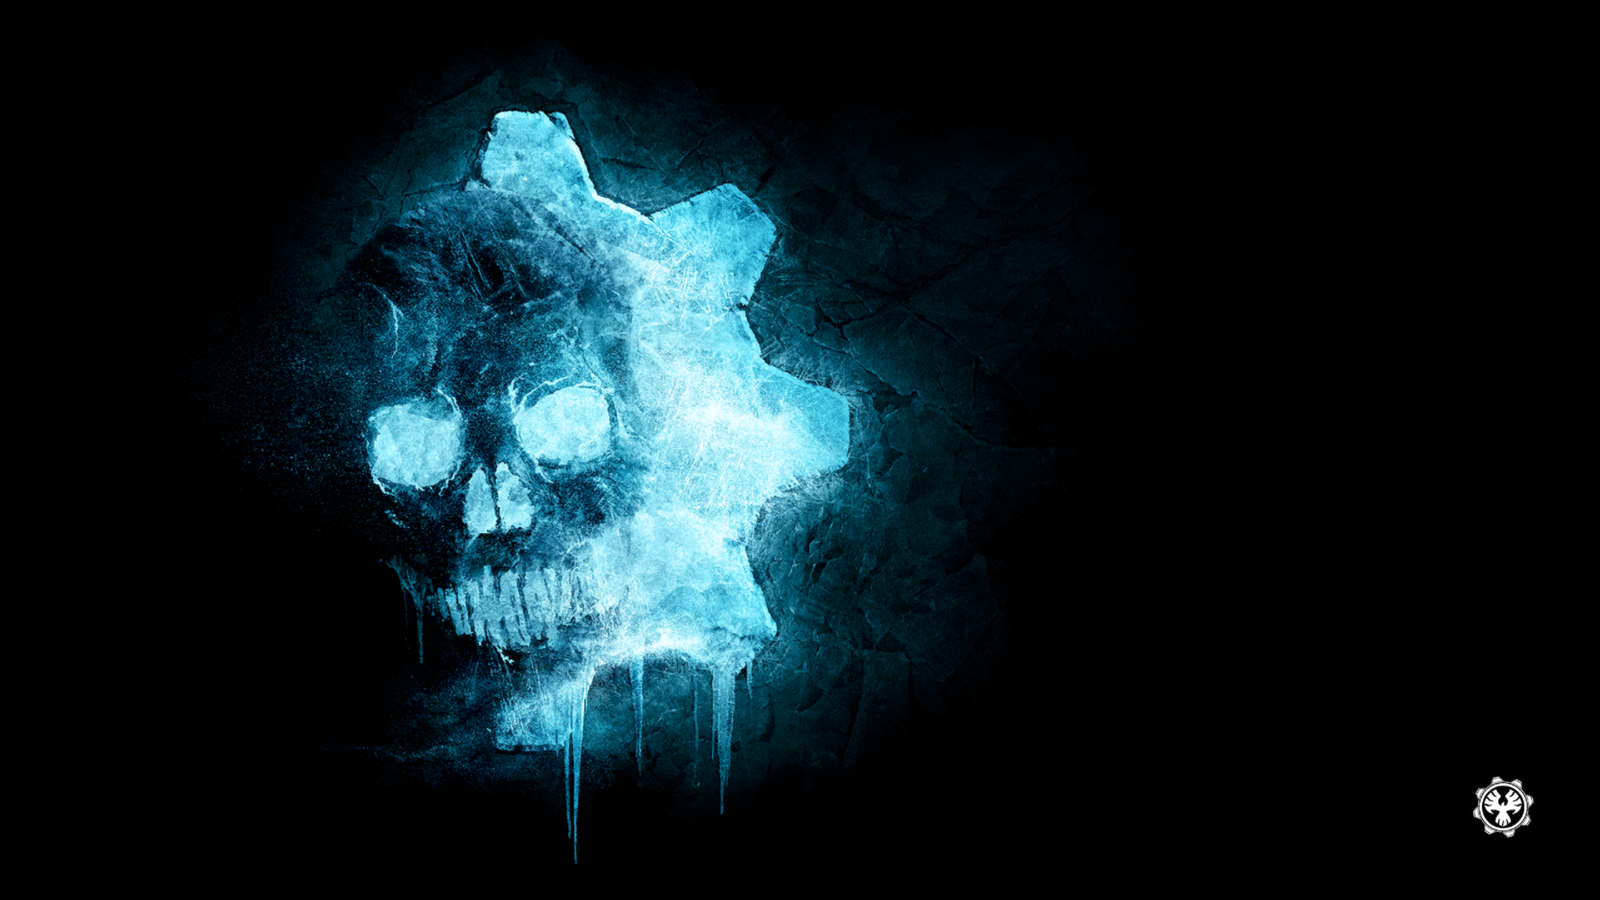 ᐈ Gears 5 PC specs revealed • WePlay!